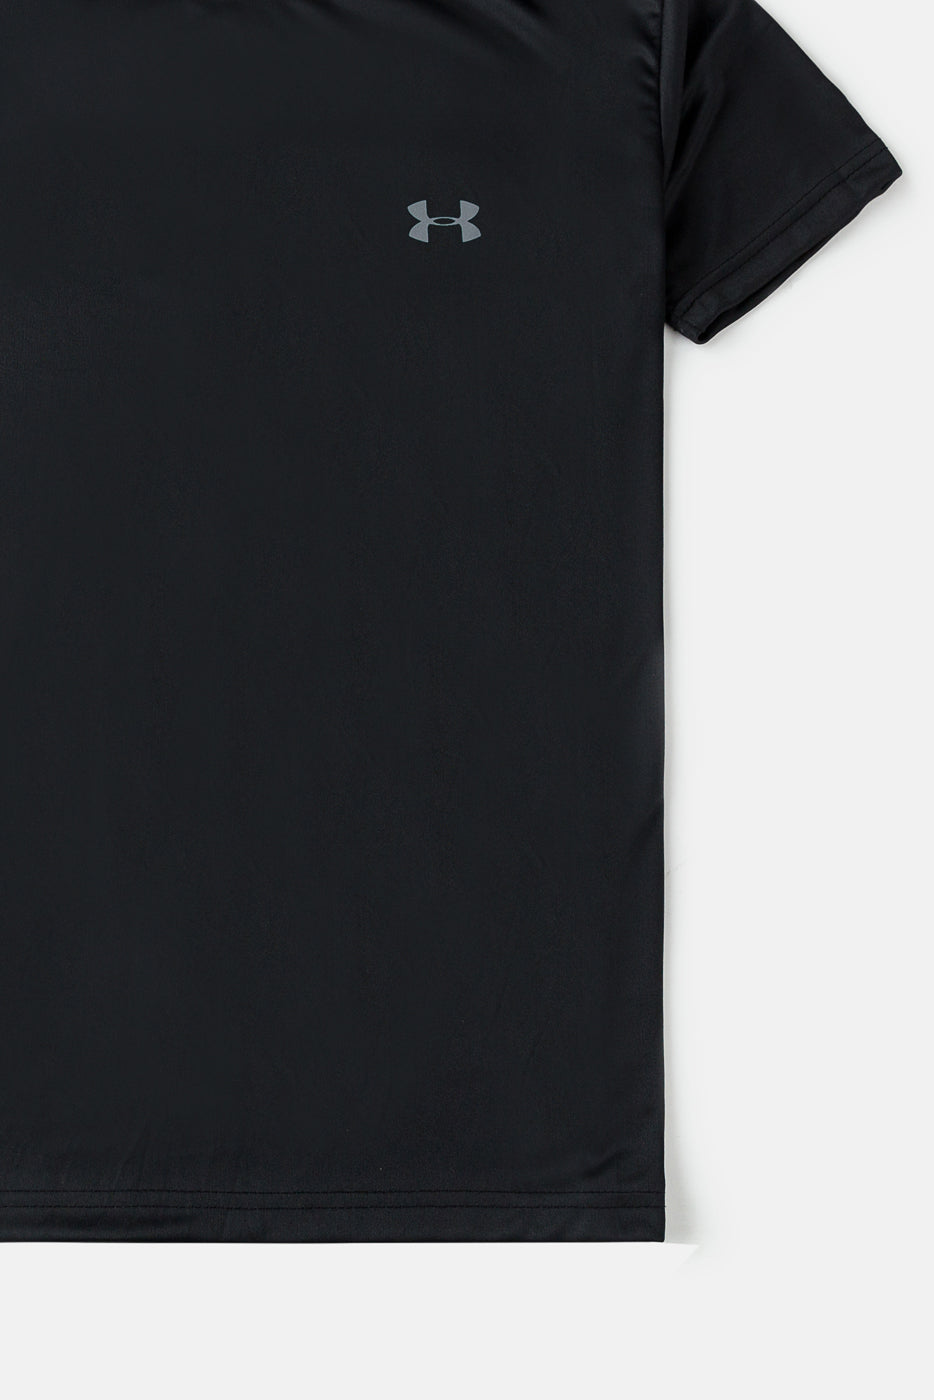 Under Armour Premium Quality Dri-FIT T-Shirt Black